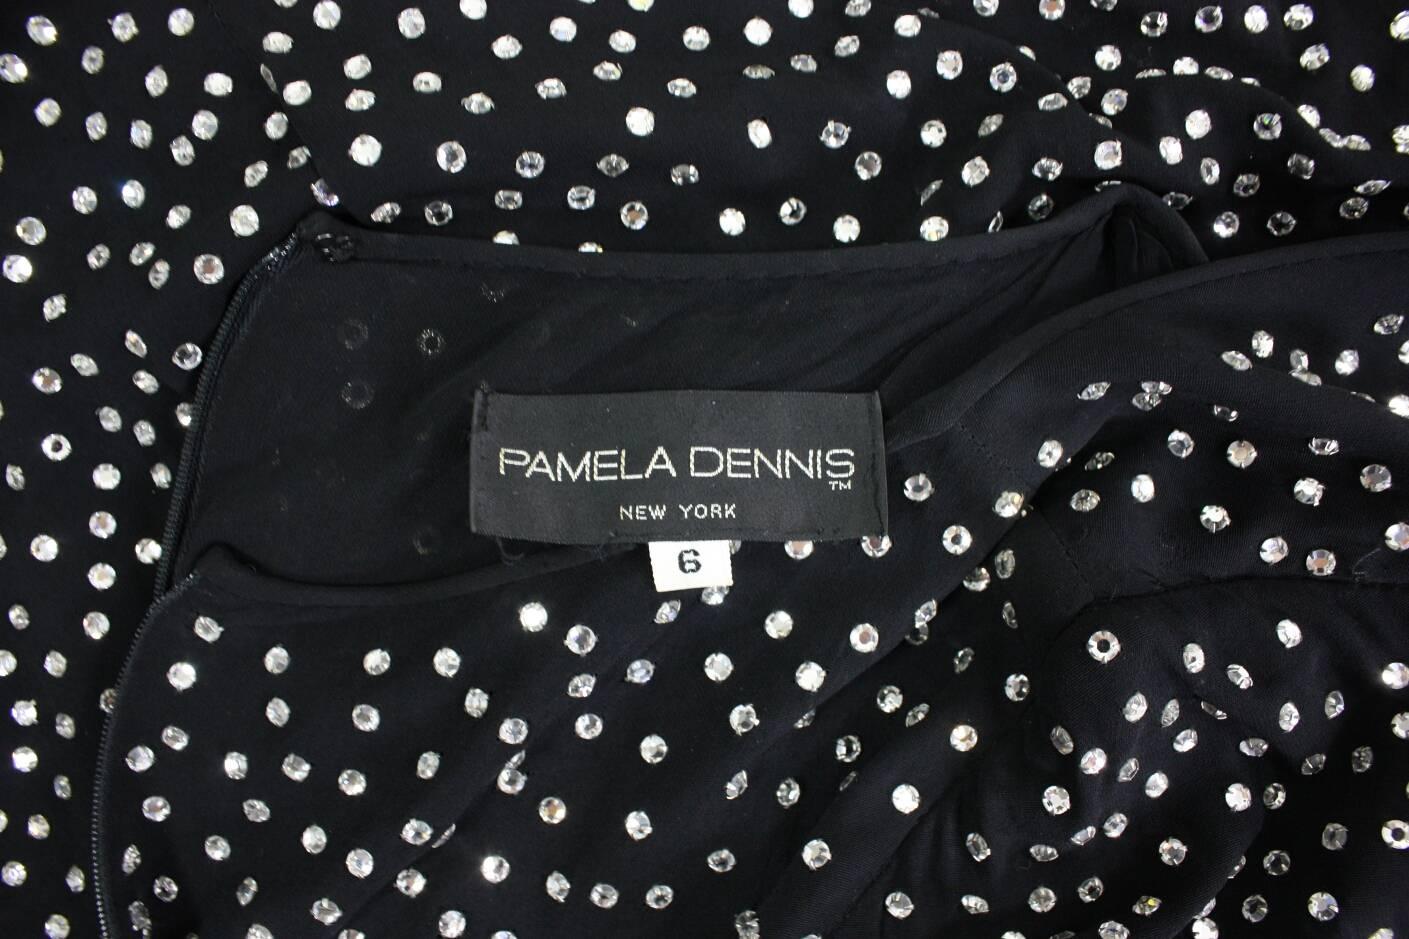 Pamela Dennis Rhinestone Studded Party Dress For Sale 2